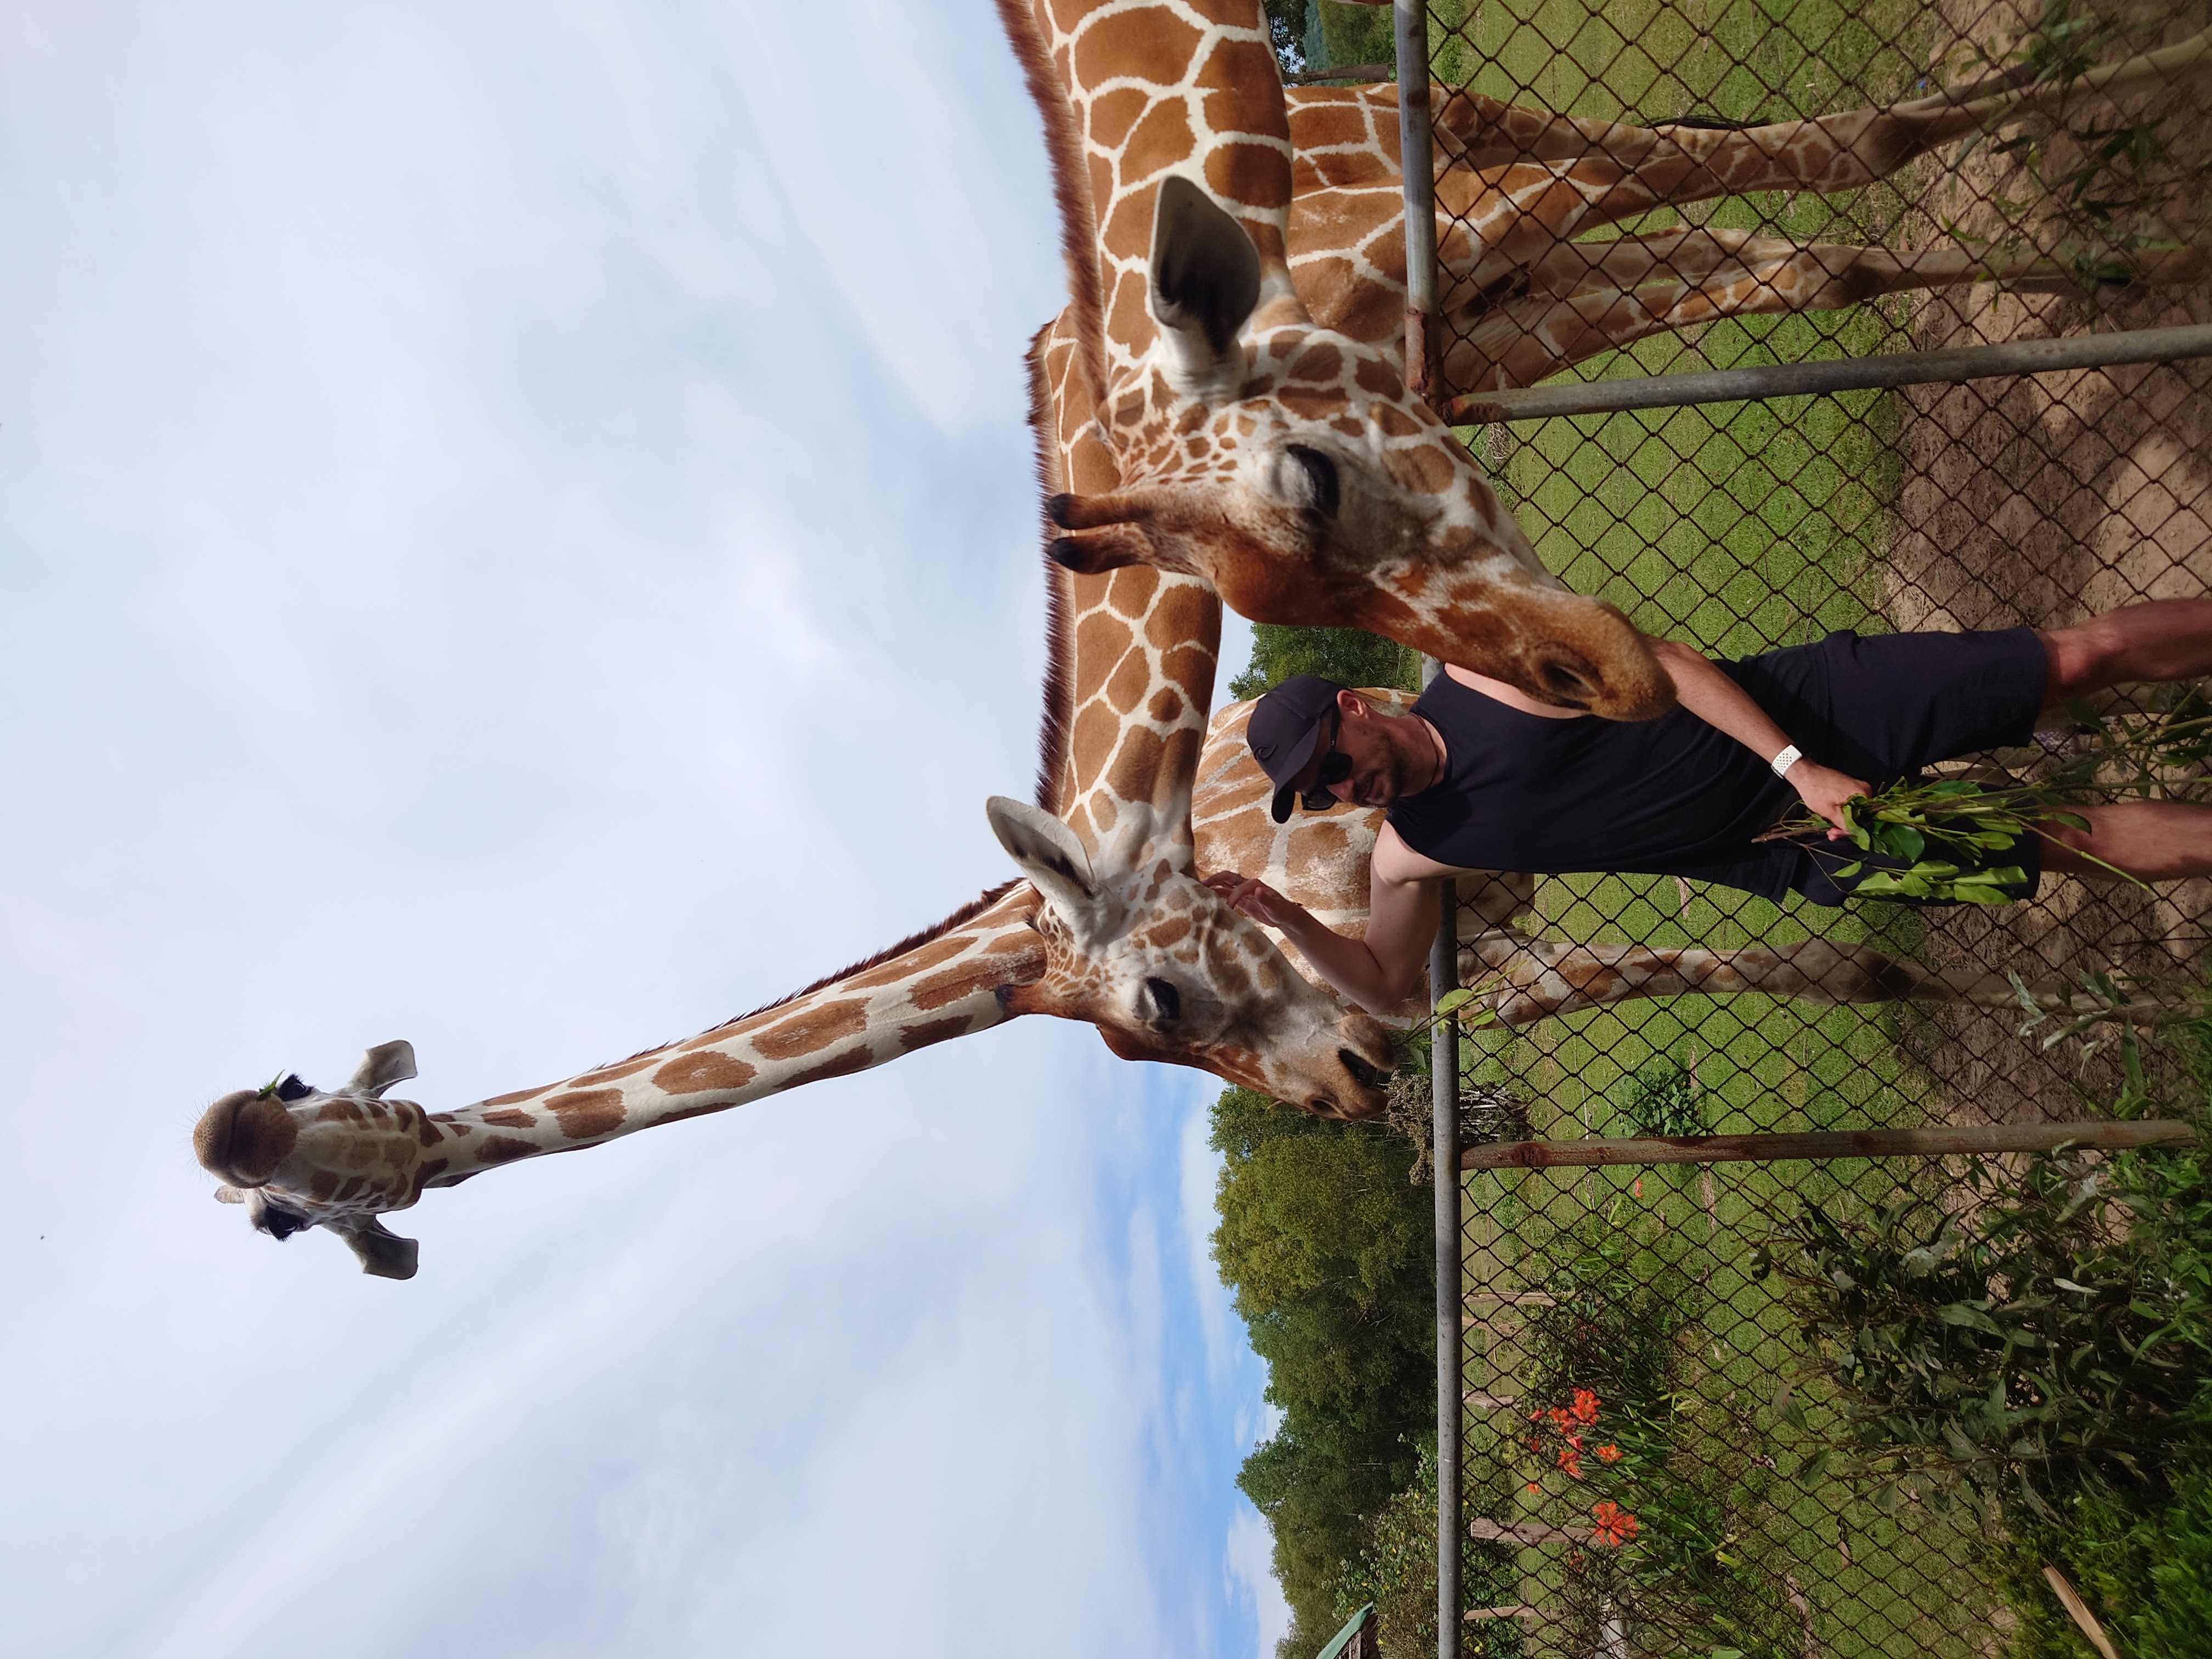 Rhys Sain with the Giraffes at Calauit Safari Park, Coron